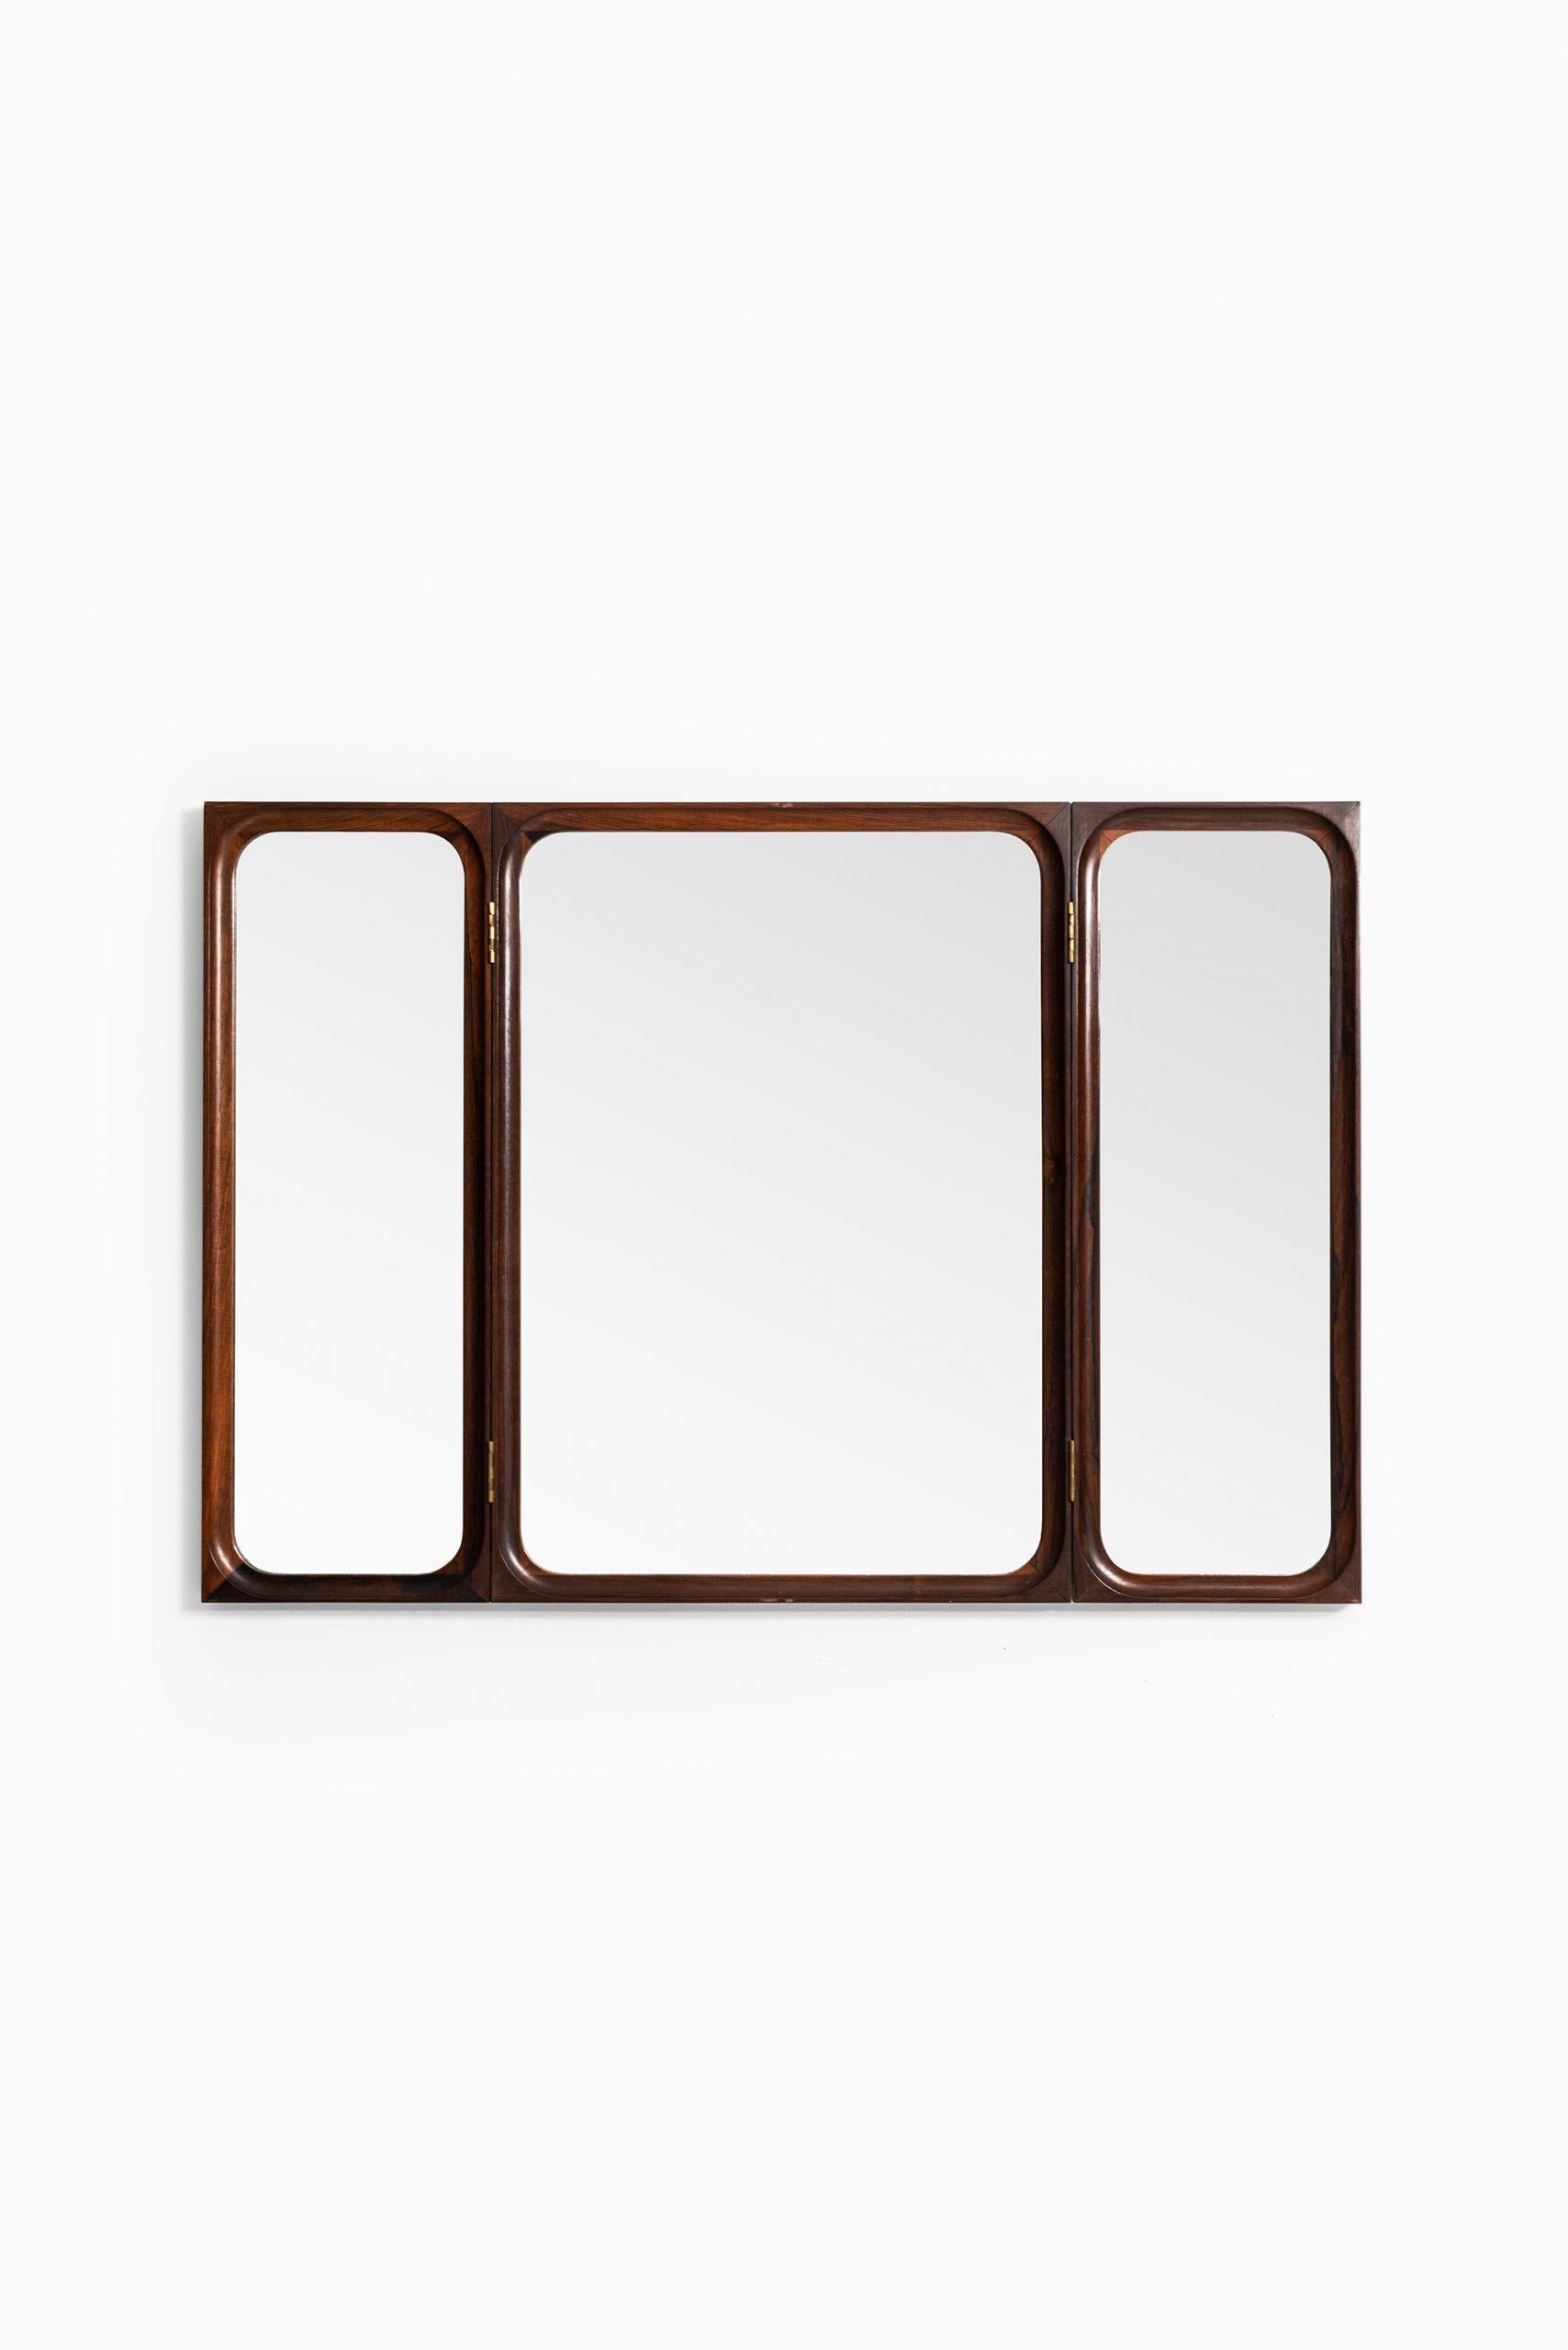 Scandinavian Modern Frode Holm Folding Mirror Produced by Illums Bolighus in Denmark For Sale